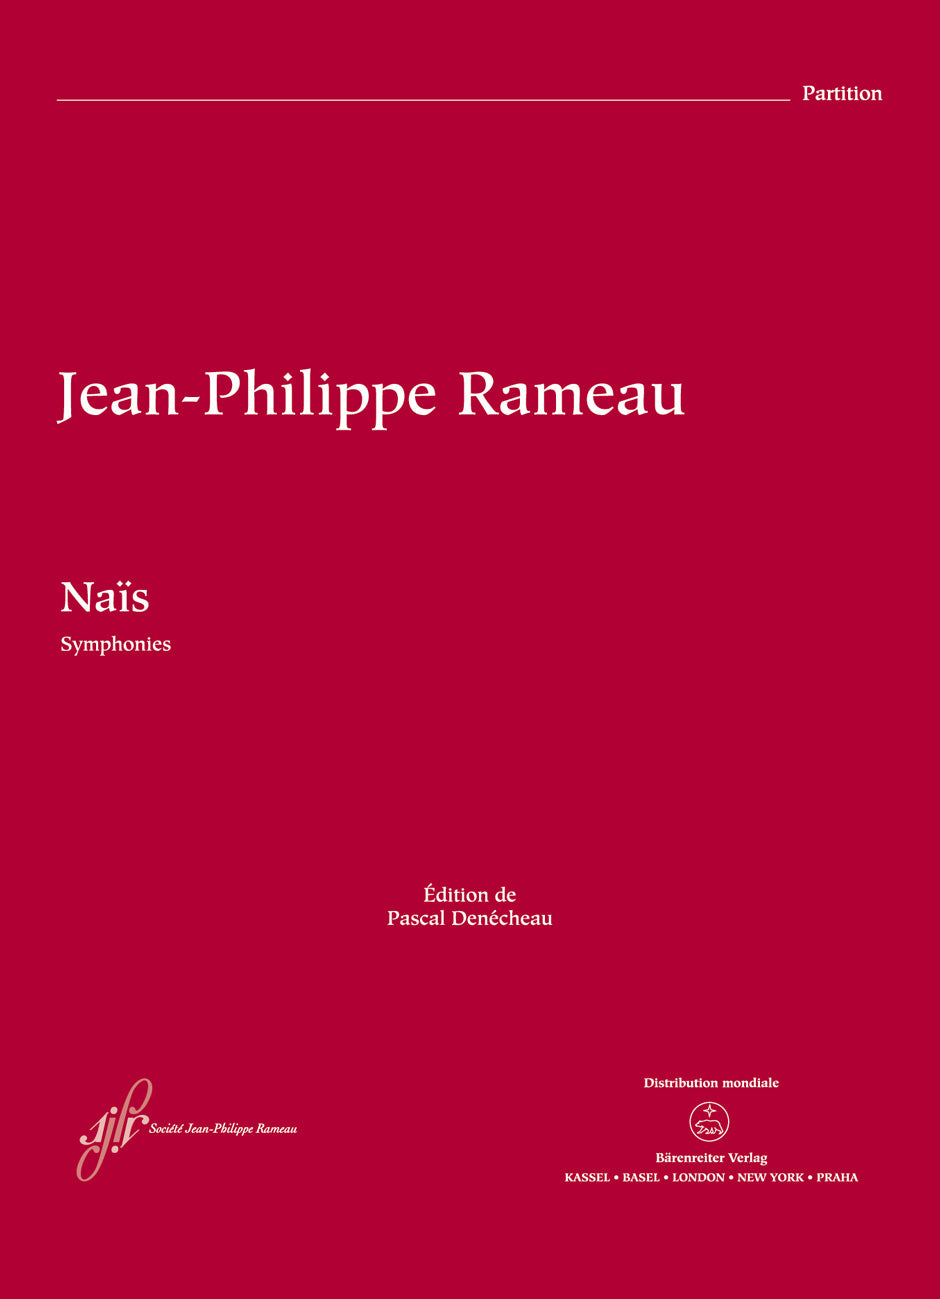 Rameau: Symphonies from Naïs, RCT 49